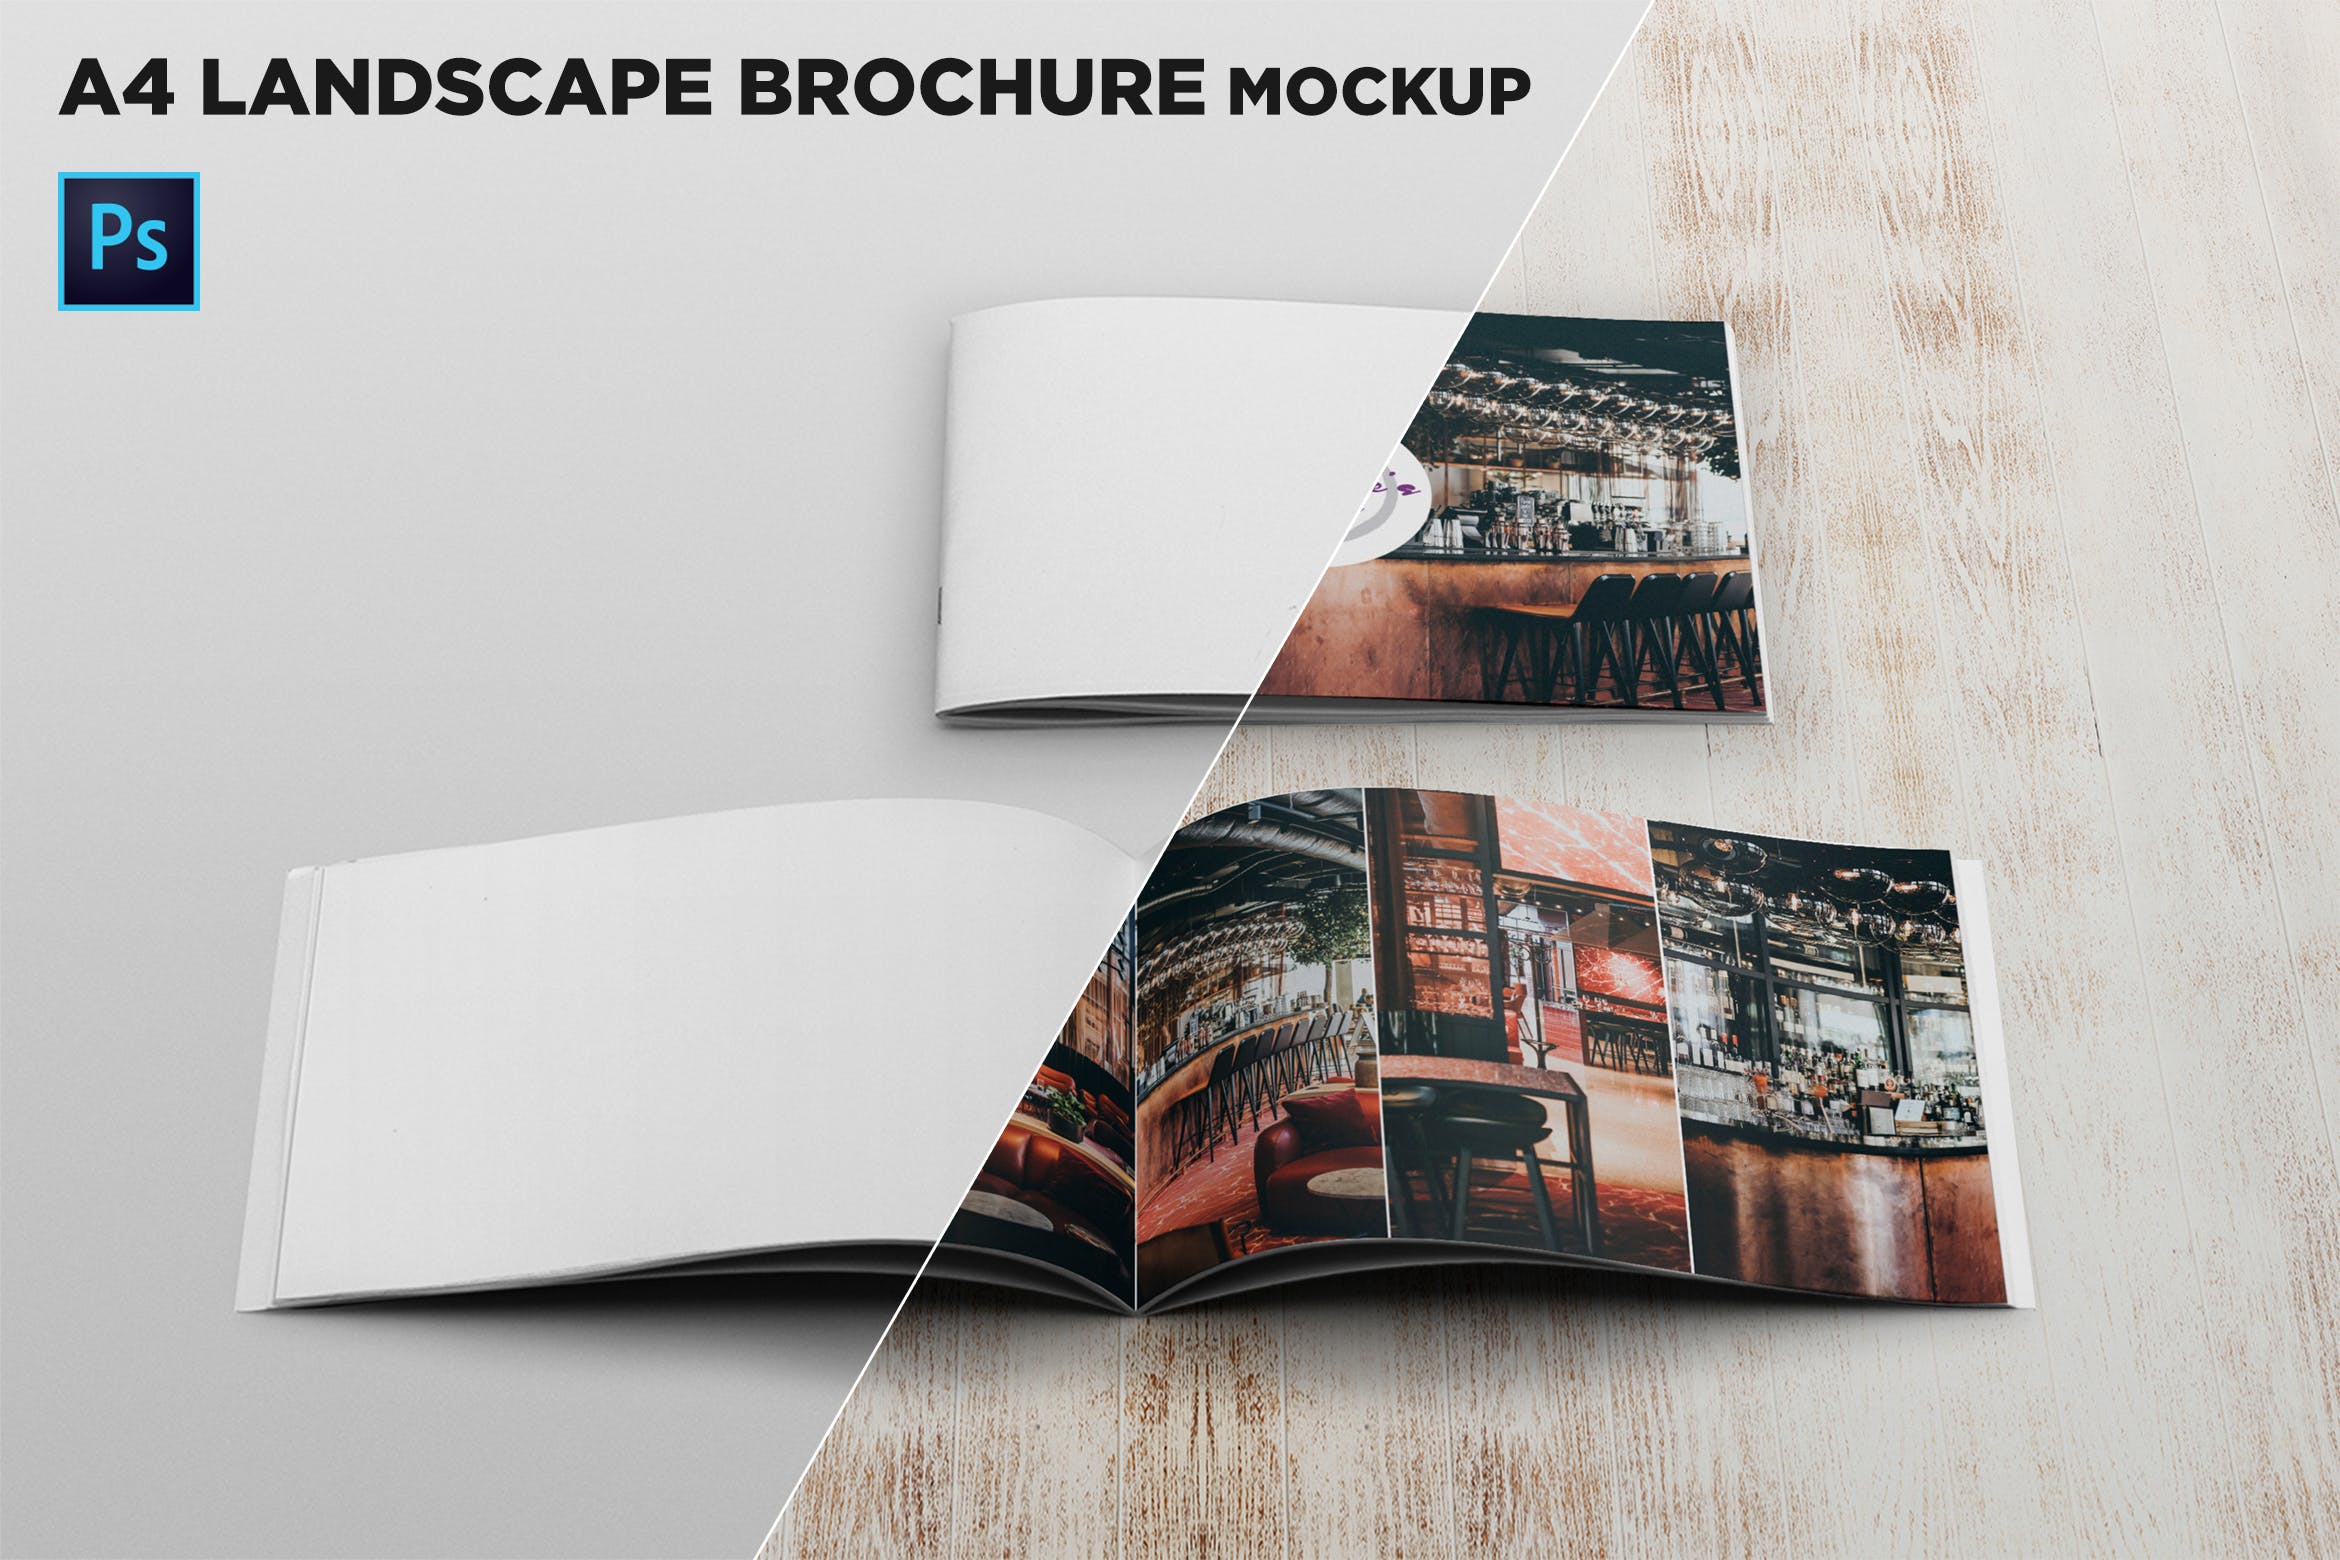 企业画册产品手册封面&内页版式设计正视图样机第一素材精选 Cover & Open Landscape Brochure Mockup Front View插图